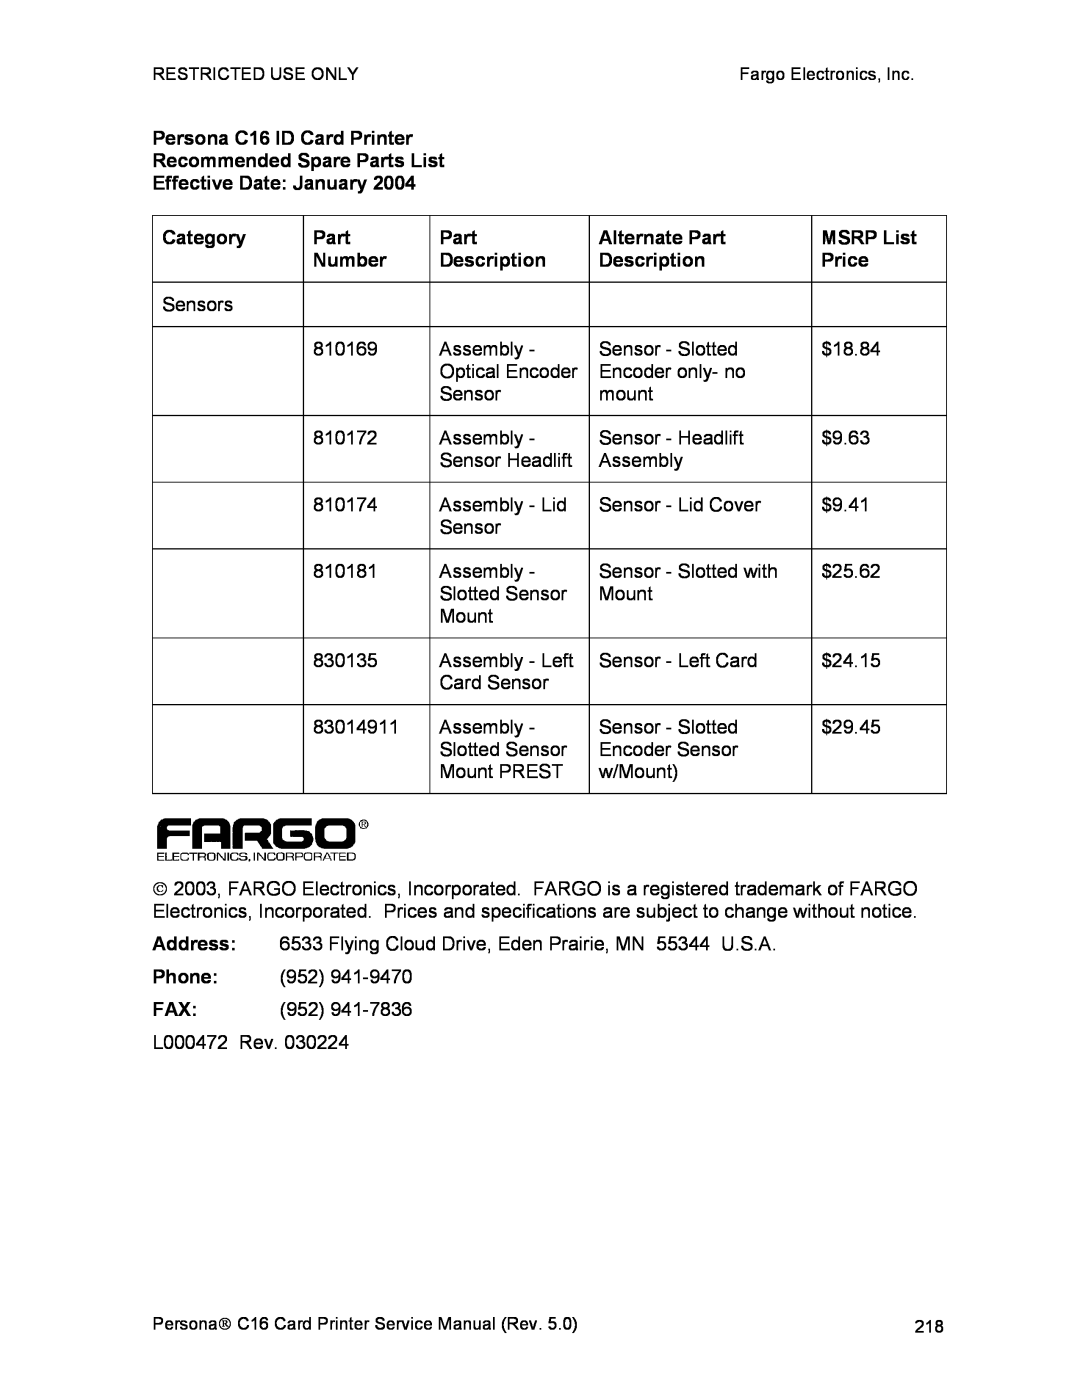 FARGO electronic service manual Persona C16 ID Card Printer 